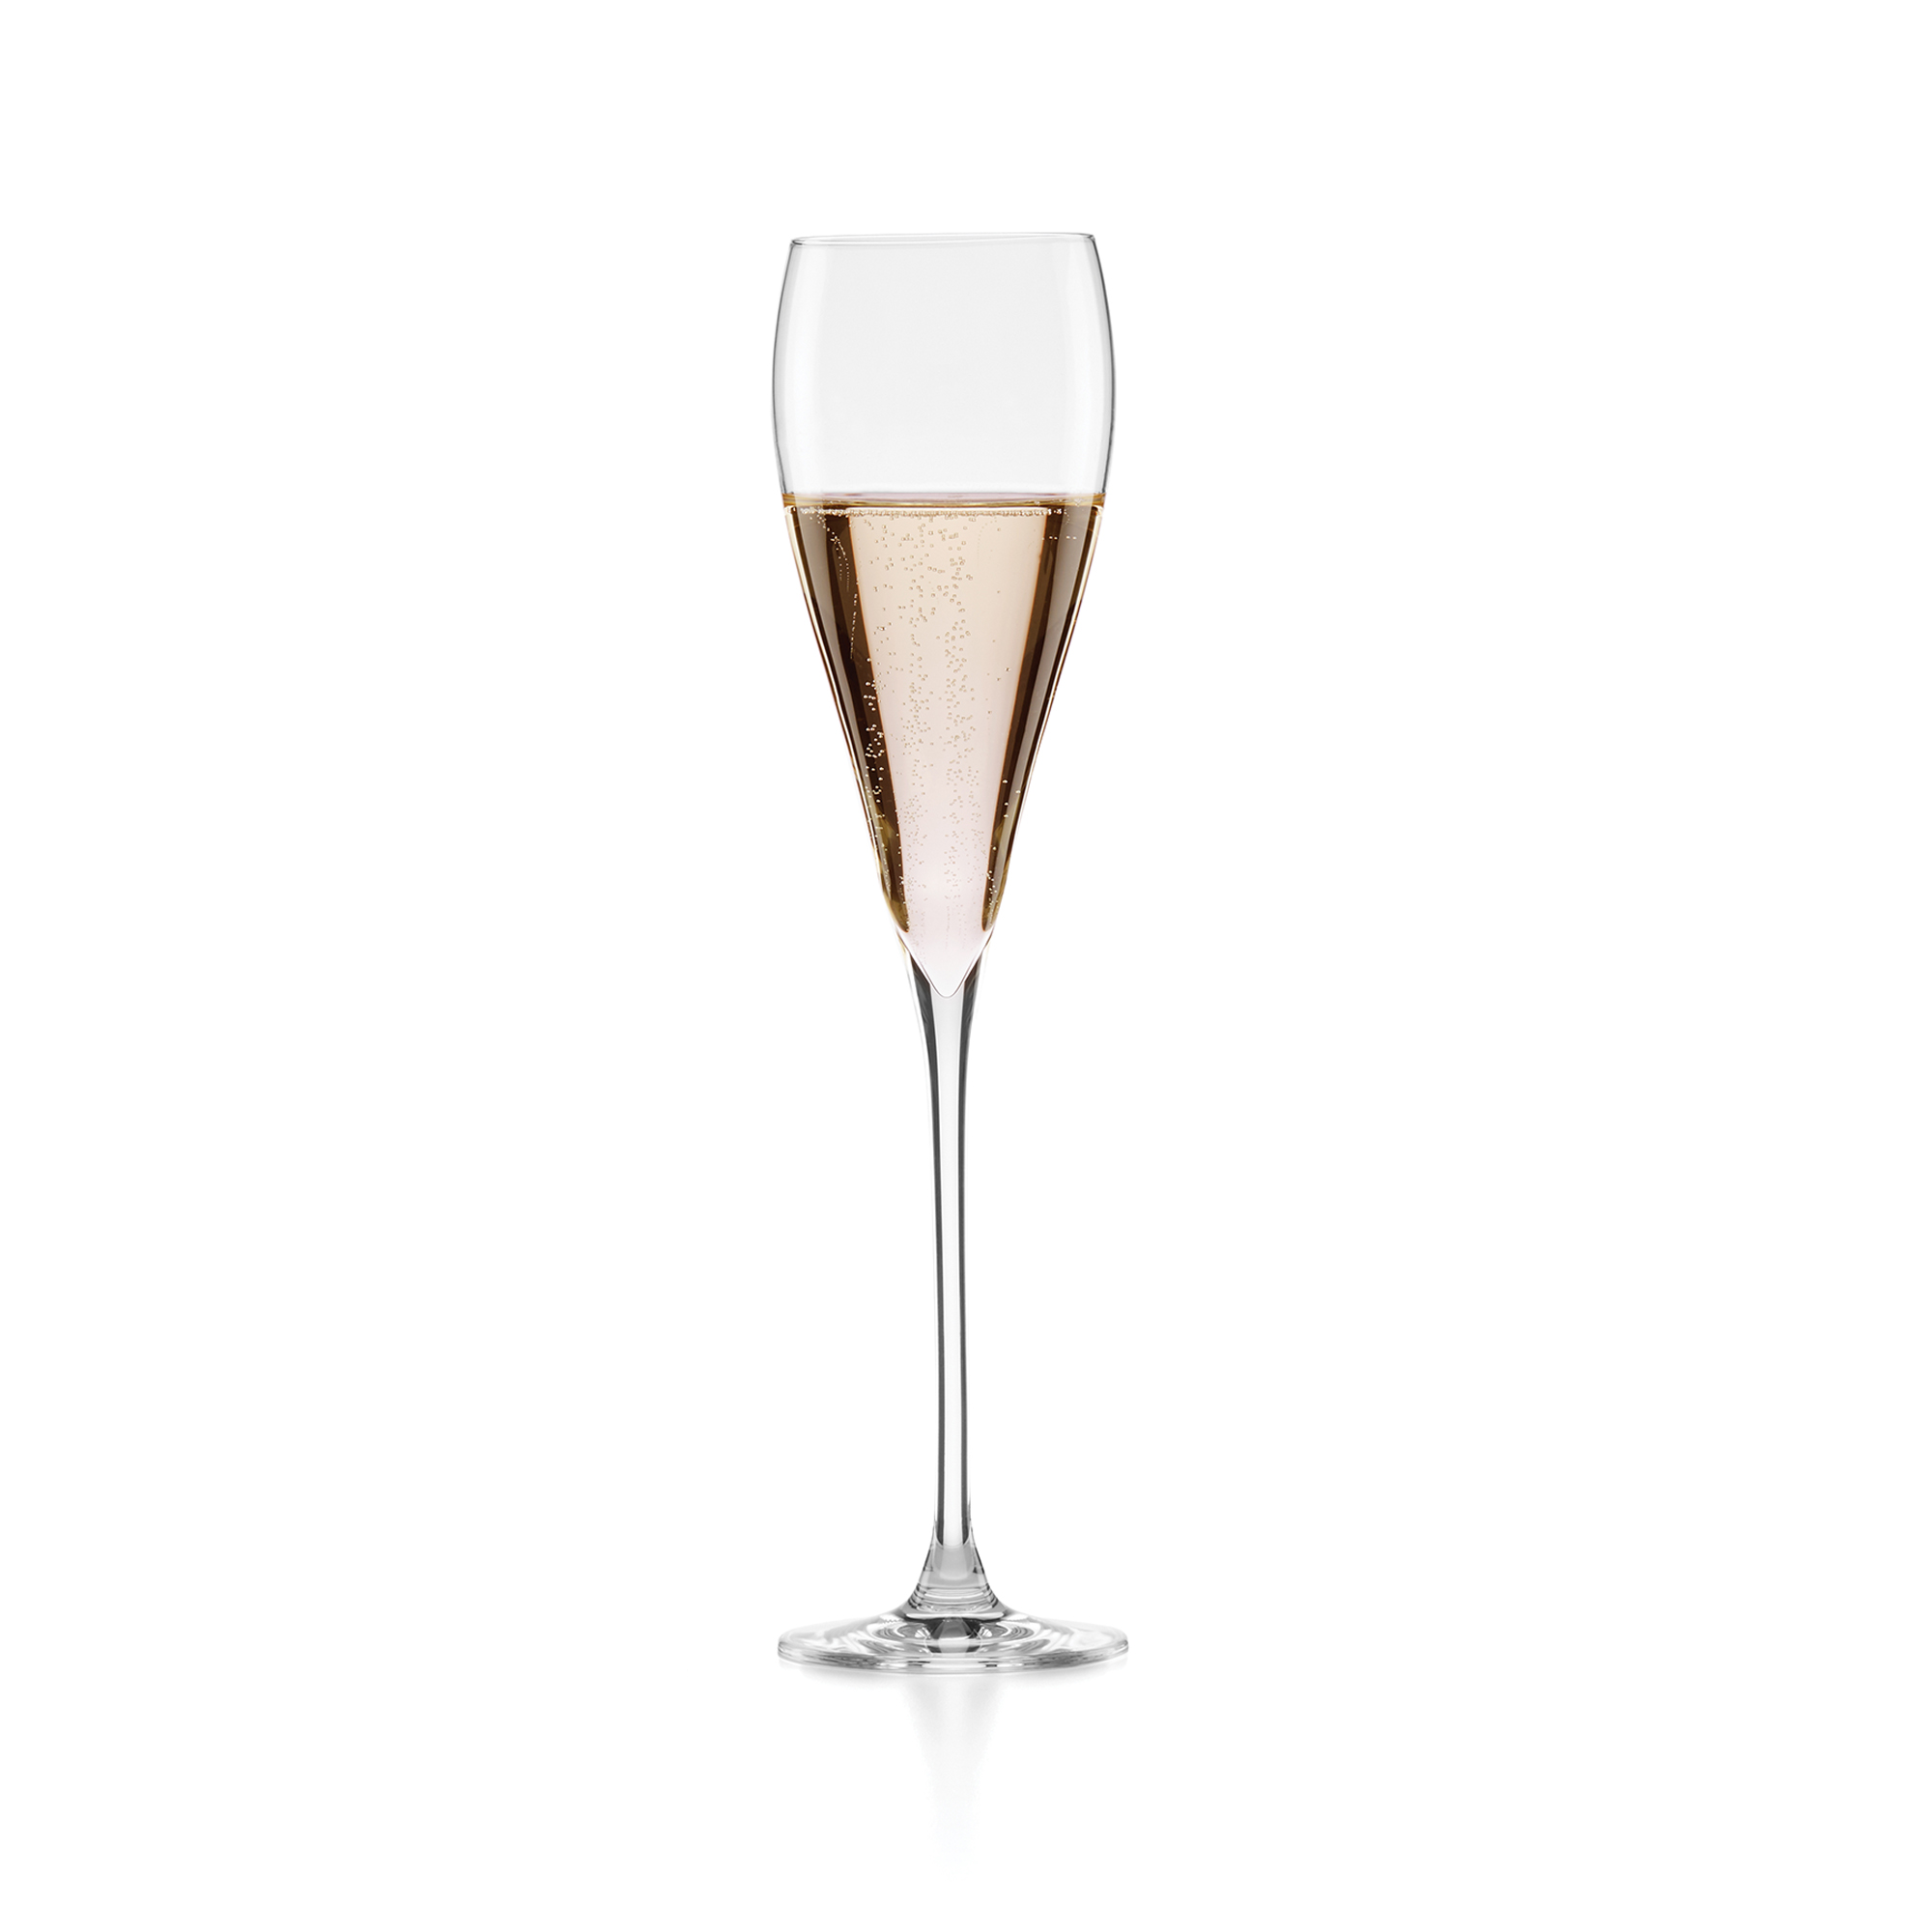 Lenox Tuscany Classics Monogrammed A Pinot Grigio Wine Glass Set